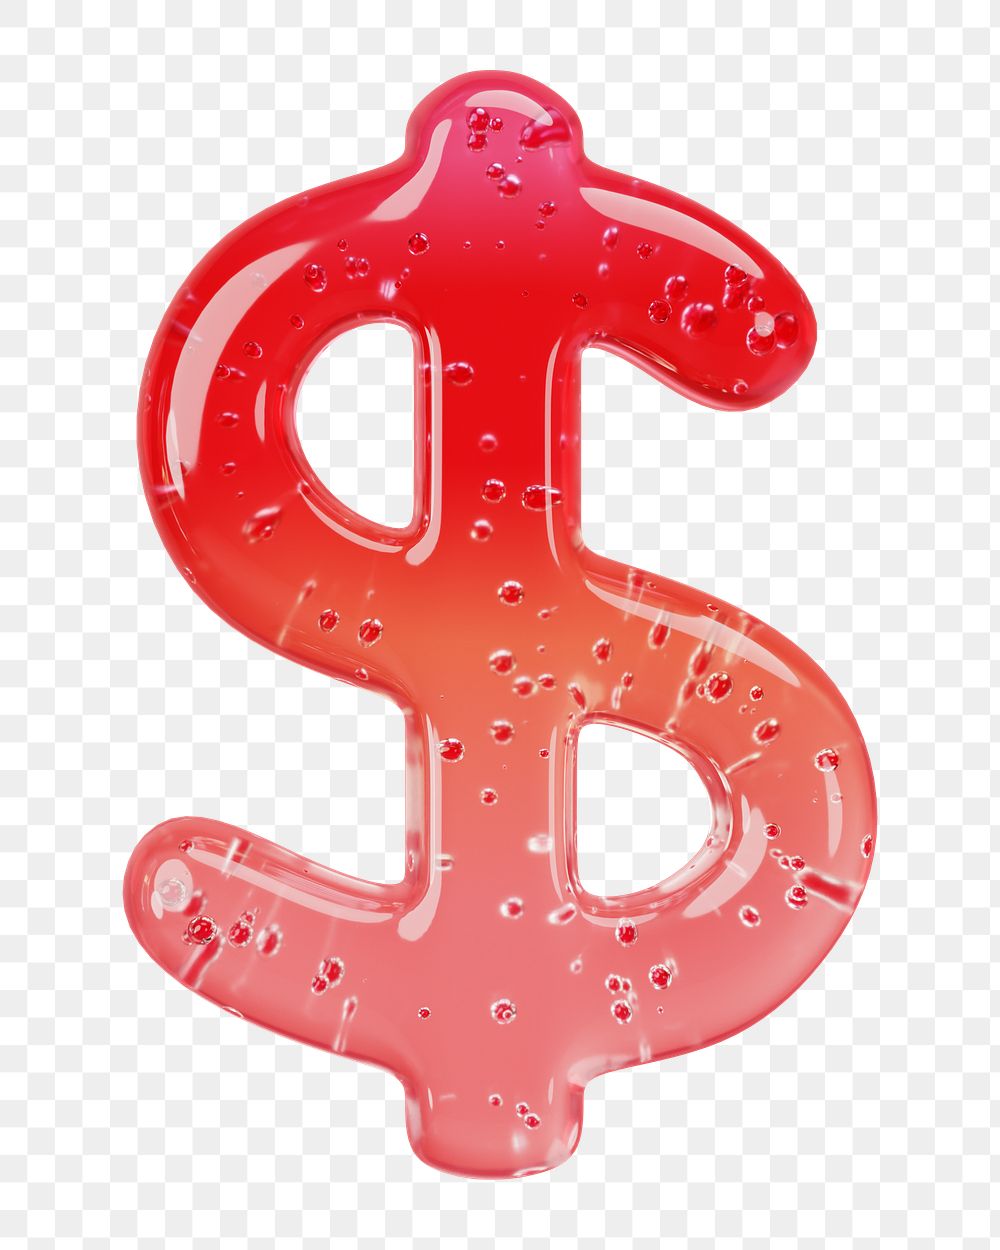 Dollar sign png 3D red jelly symbol, transparent background